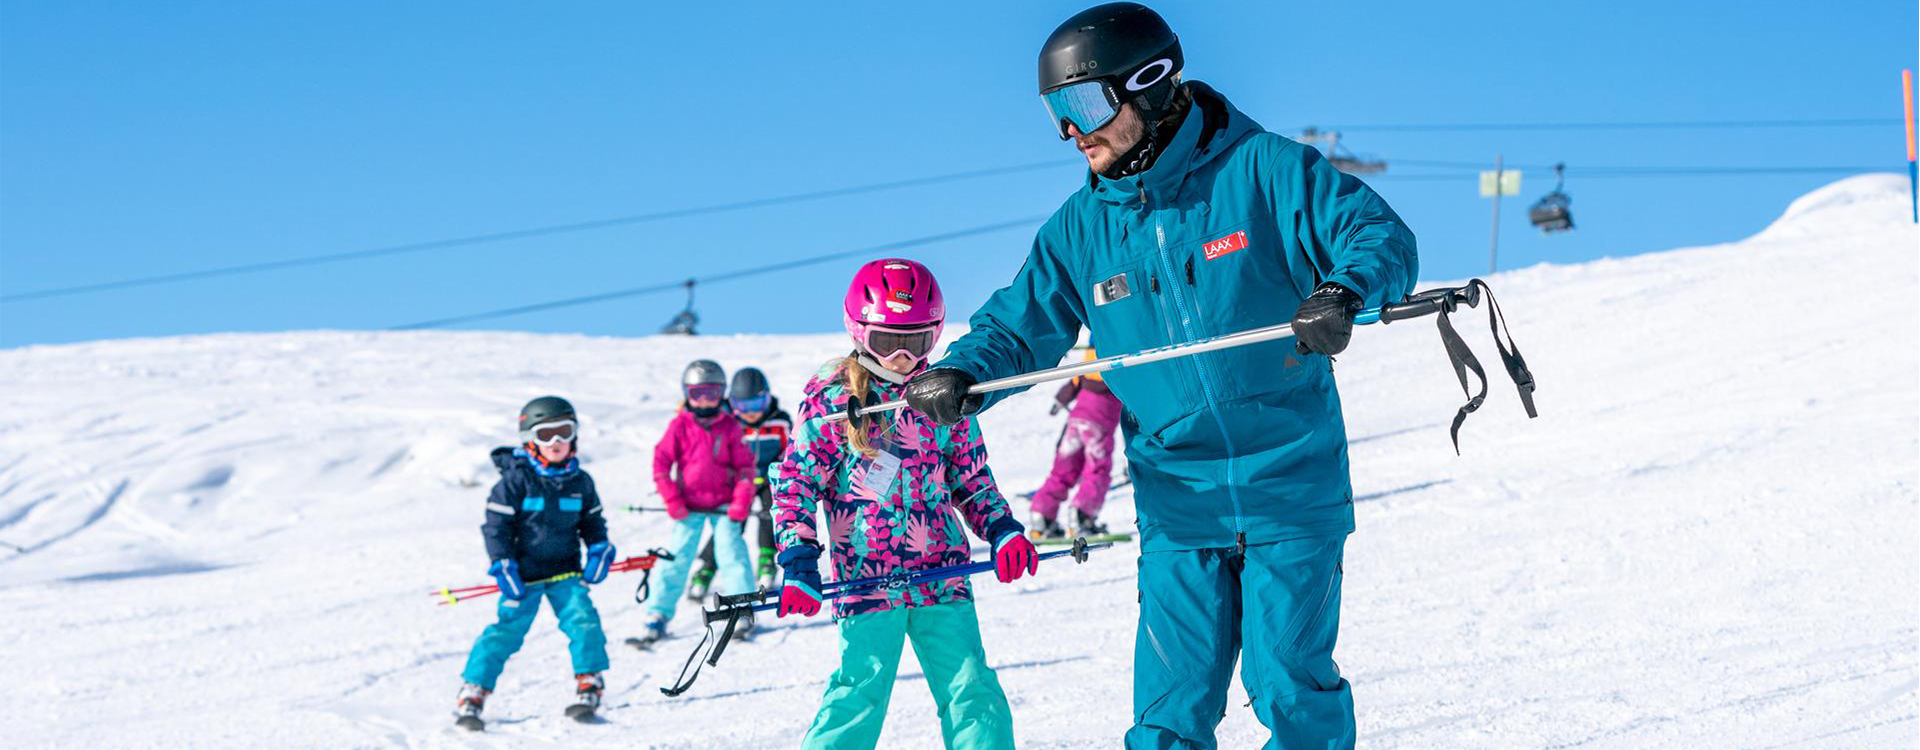 skischool skischule laax school skilehrer kinder skifahren ski